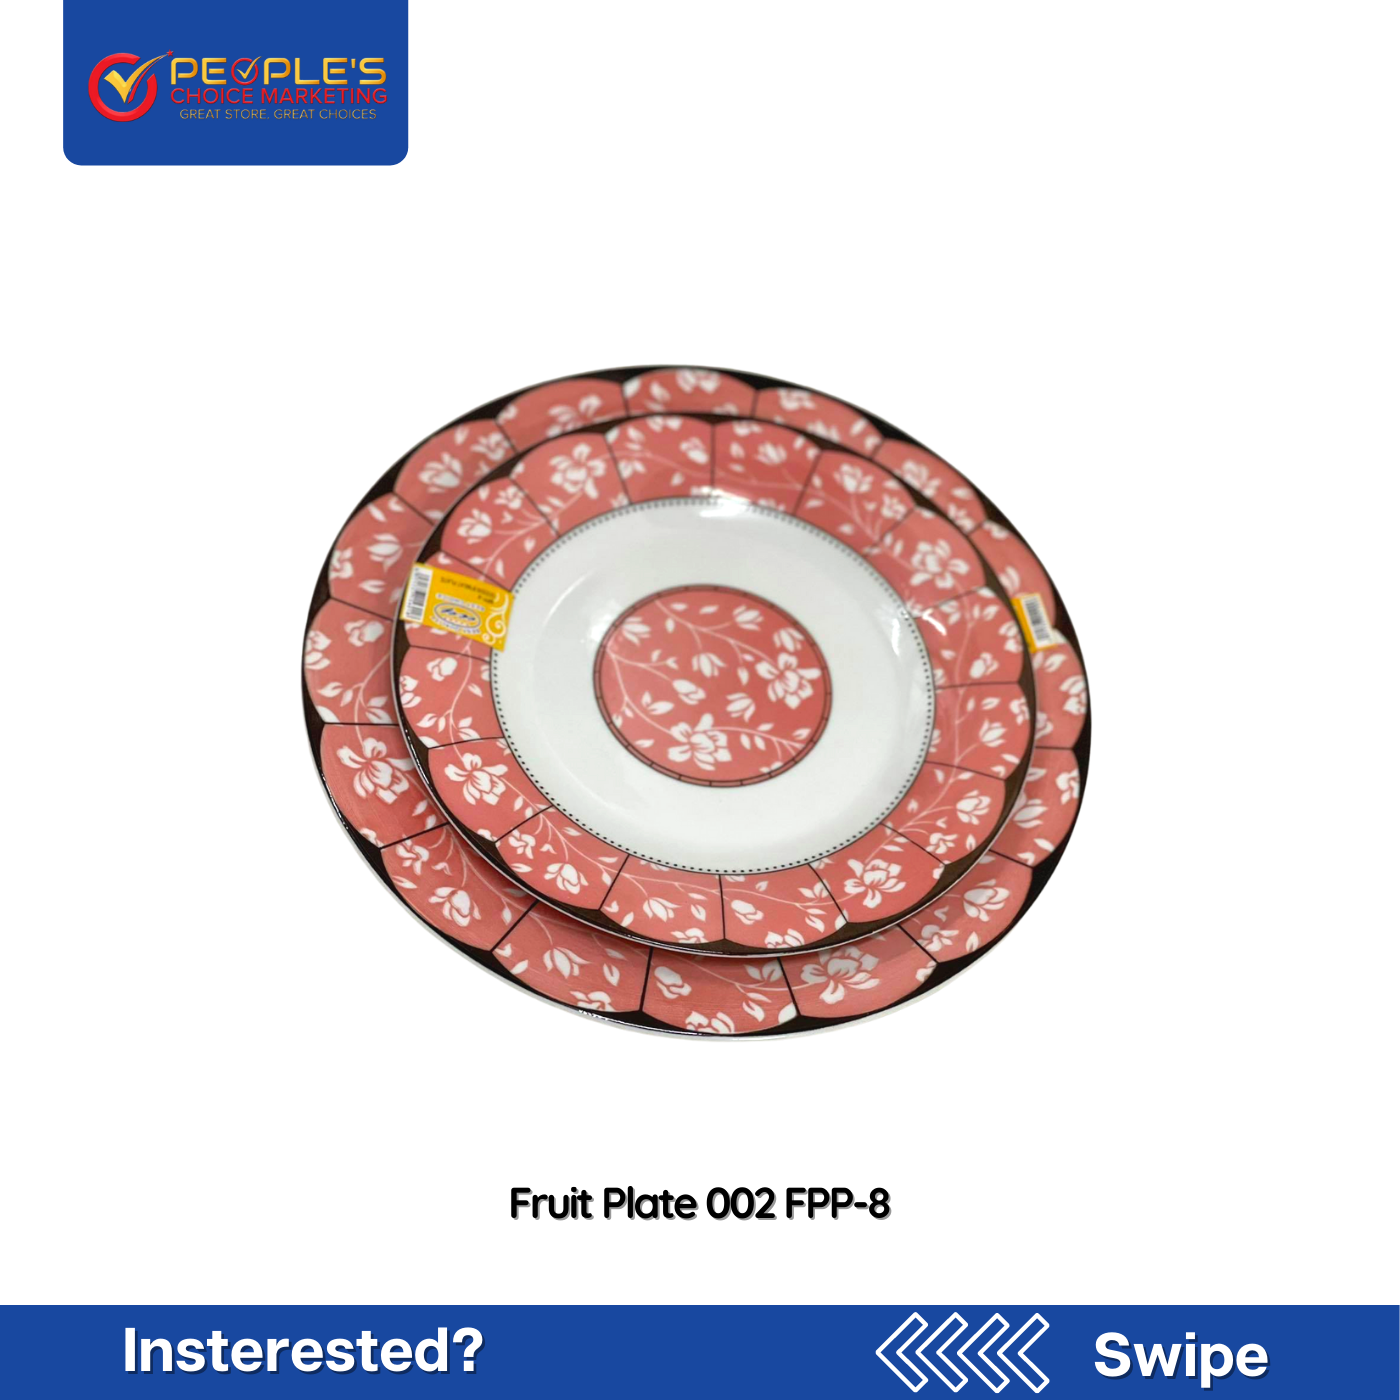 Fruit Plate 002 FPP-8